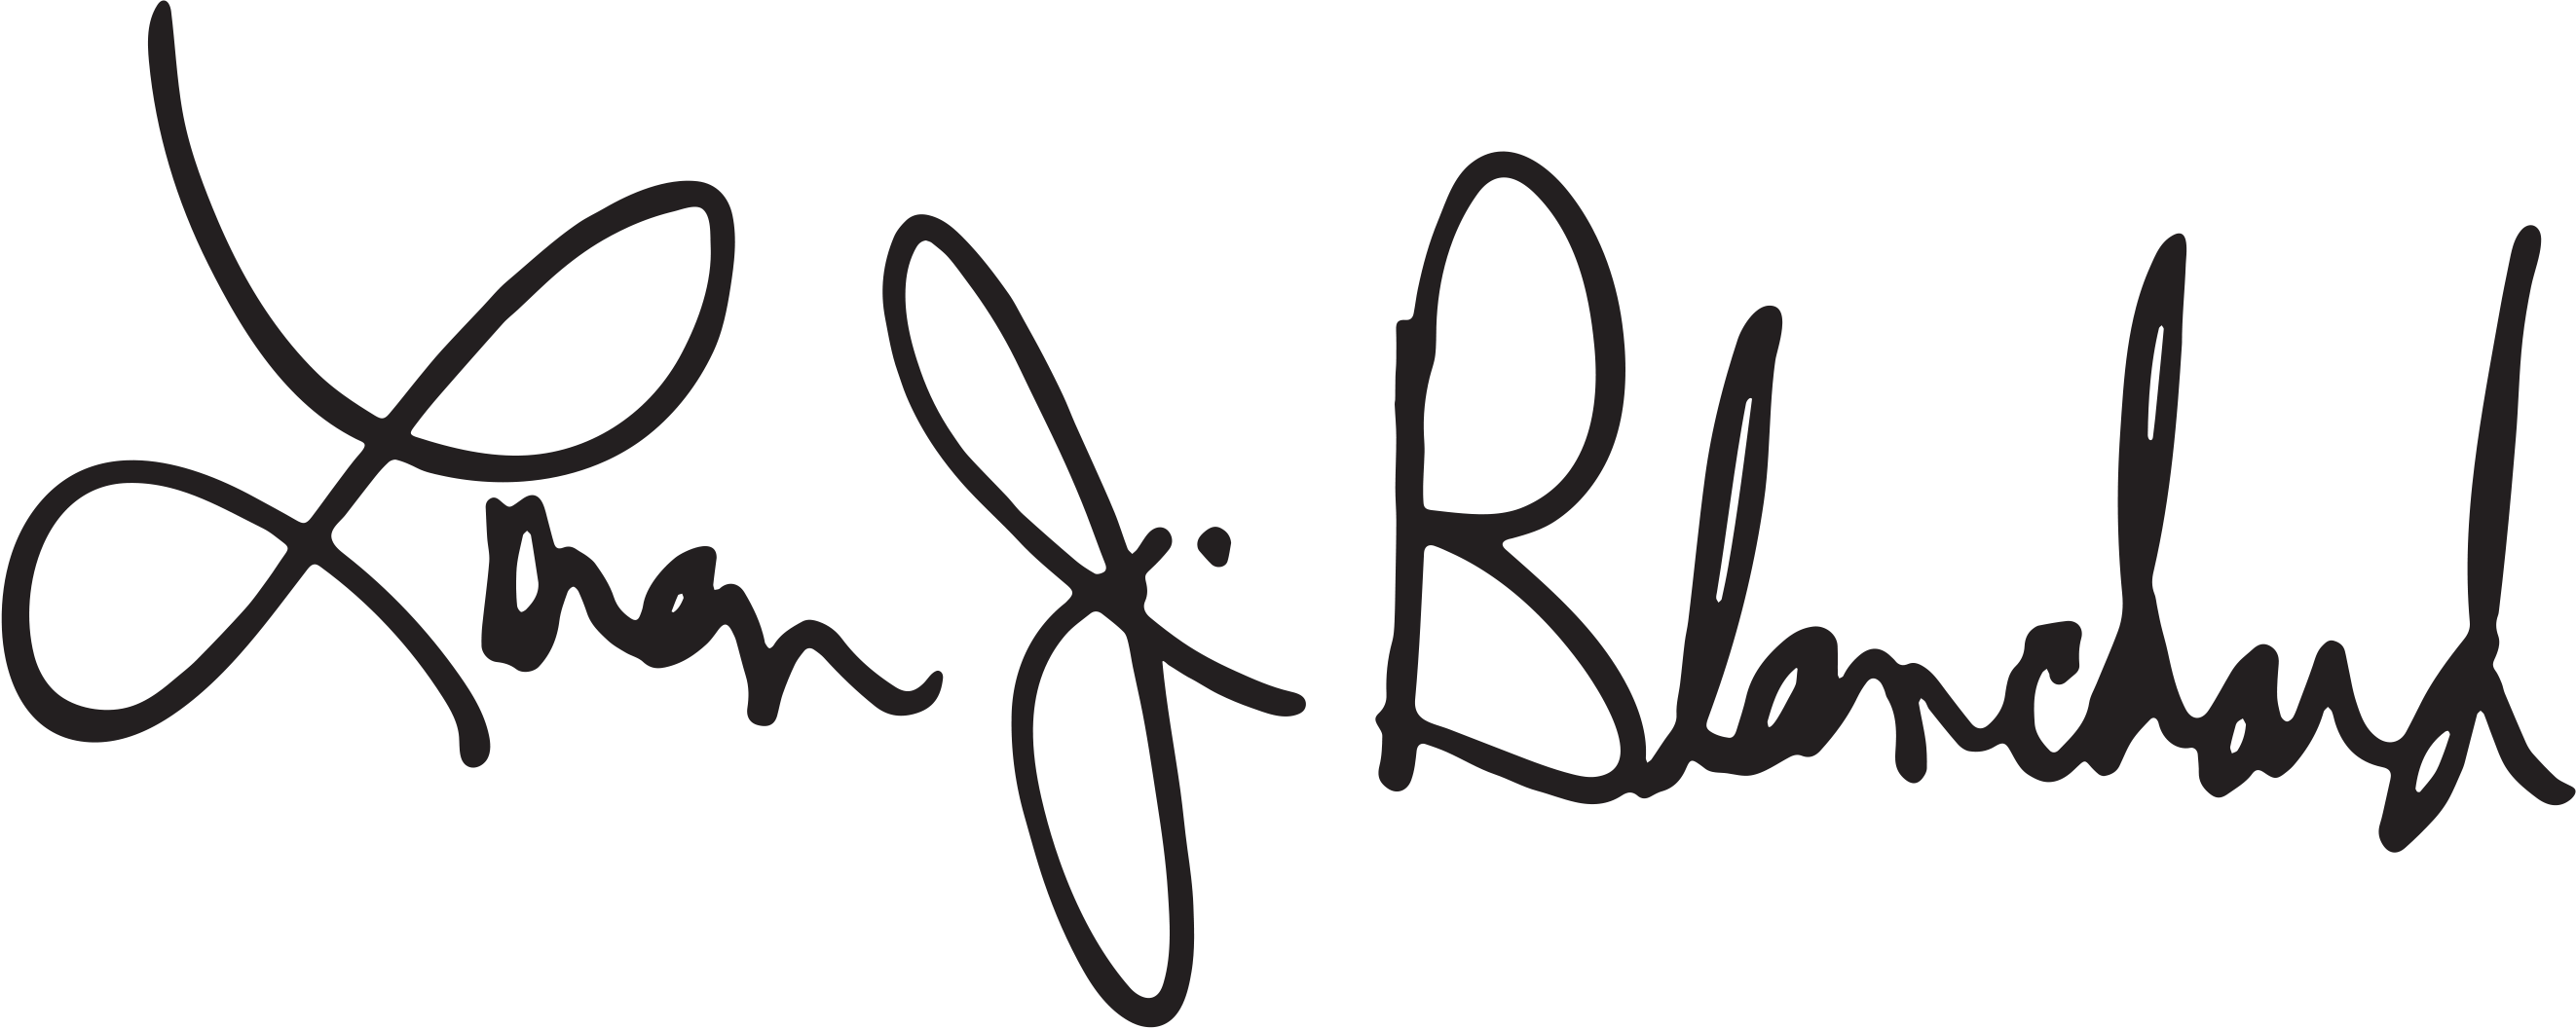 President Blanchard's Signature